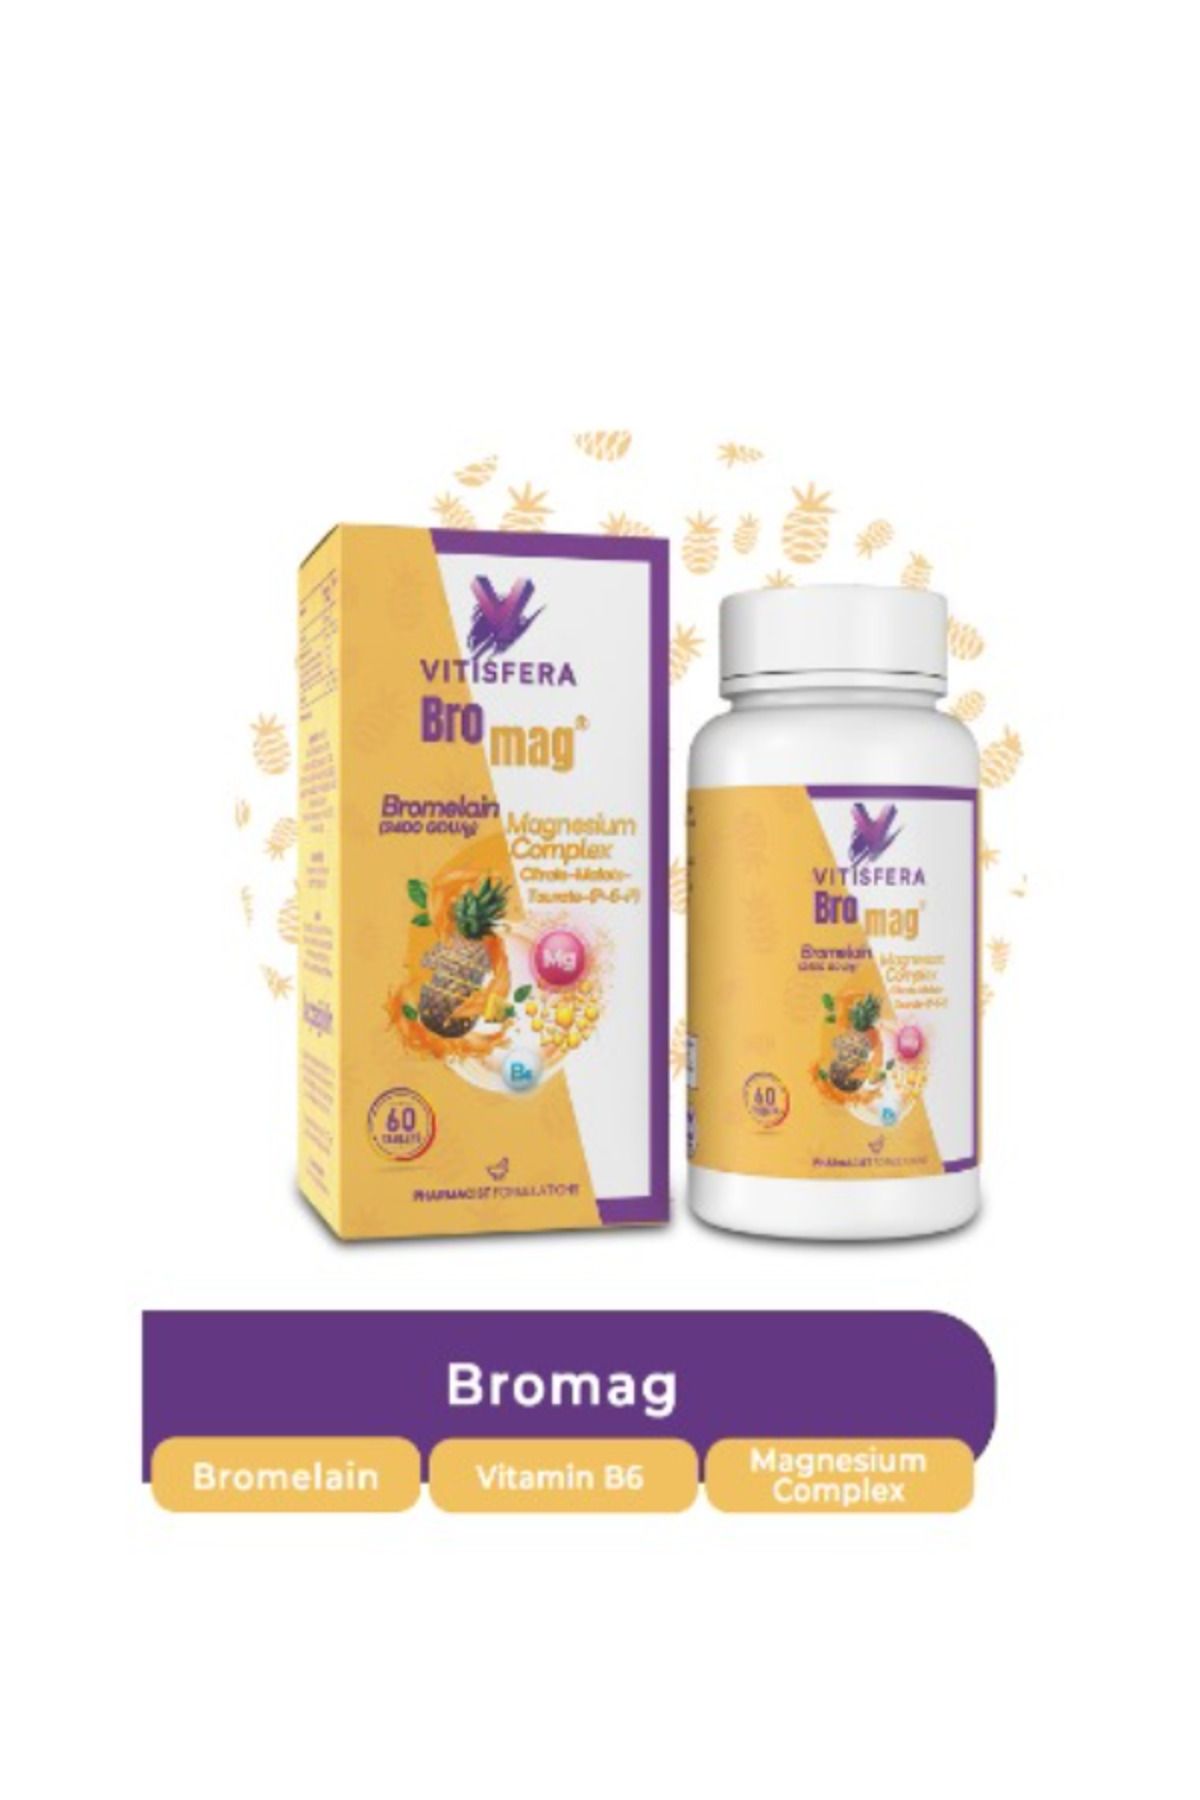 Vitisfera Bromag Bromelain-magnezyum Kompleks-vitamin B6 60 Tablet